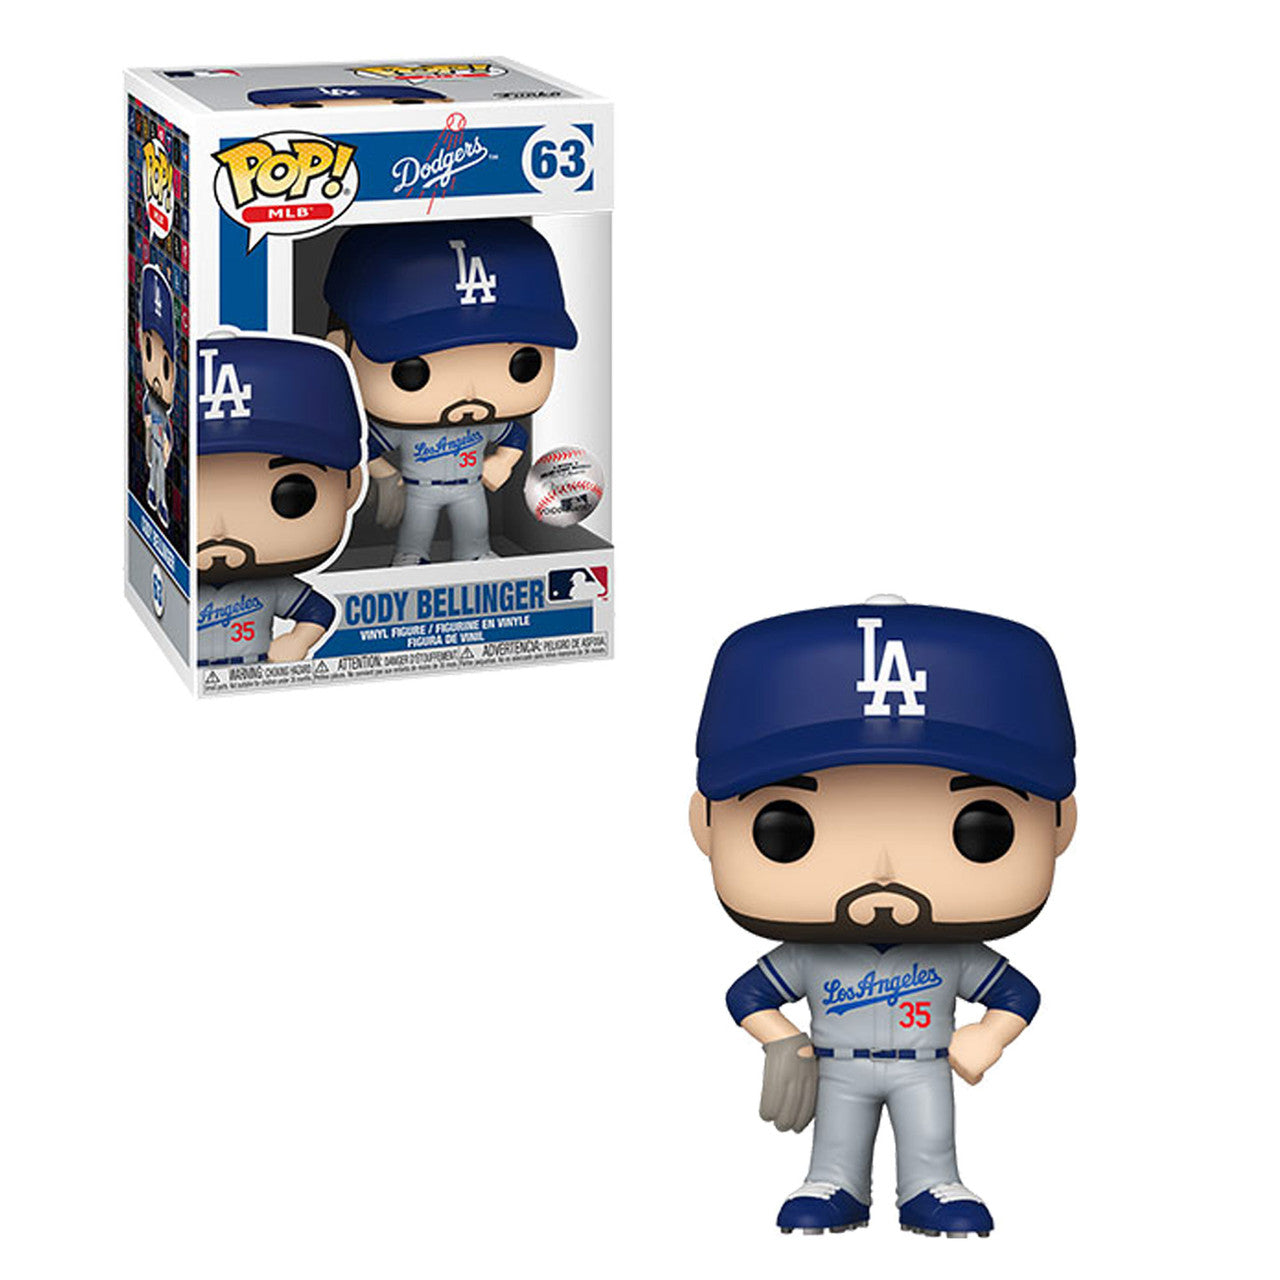 MLB Pop! Series 4 Cody Bellinger Los Angeles Dodgers Gray Uniform